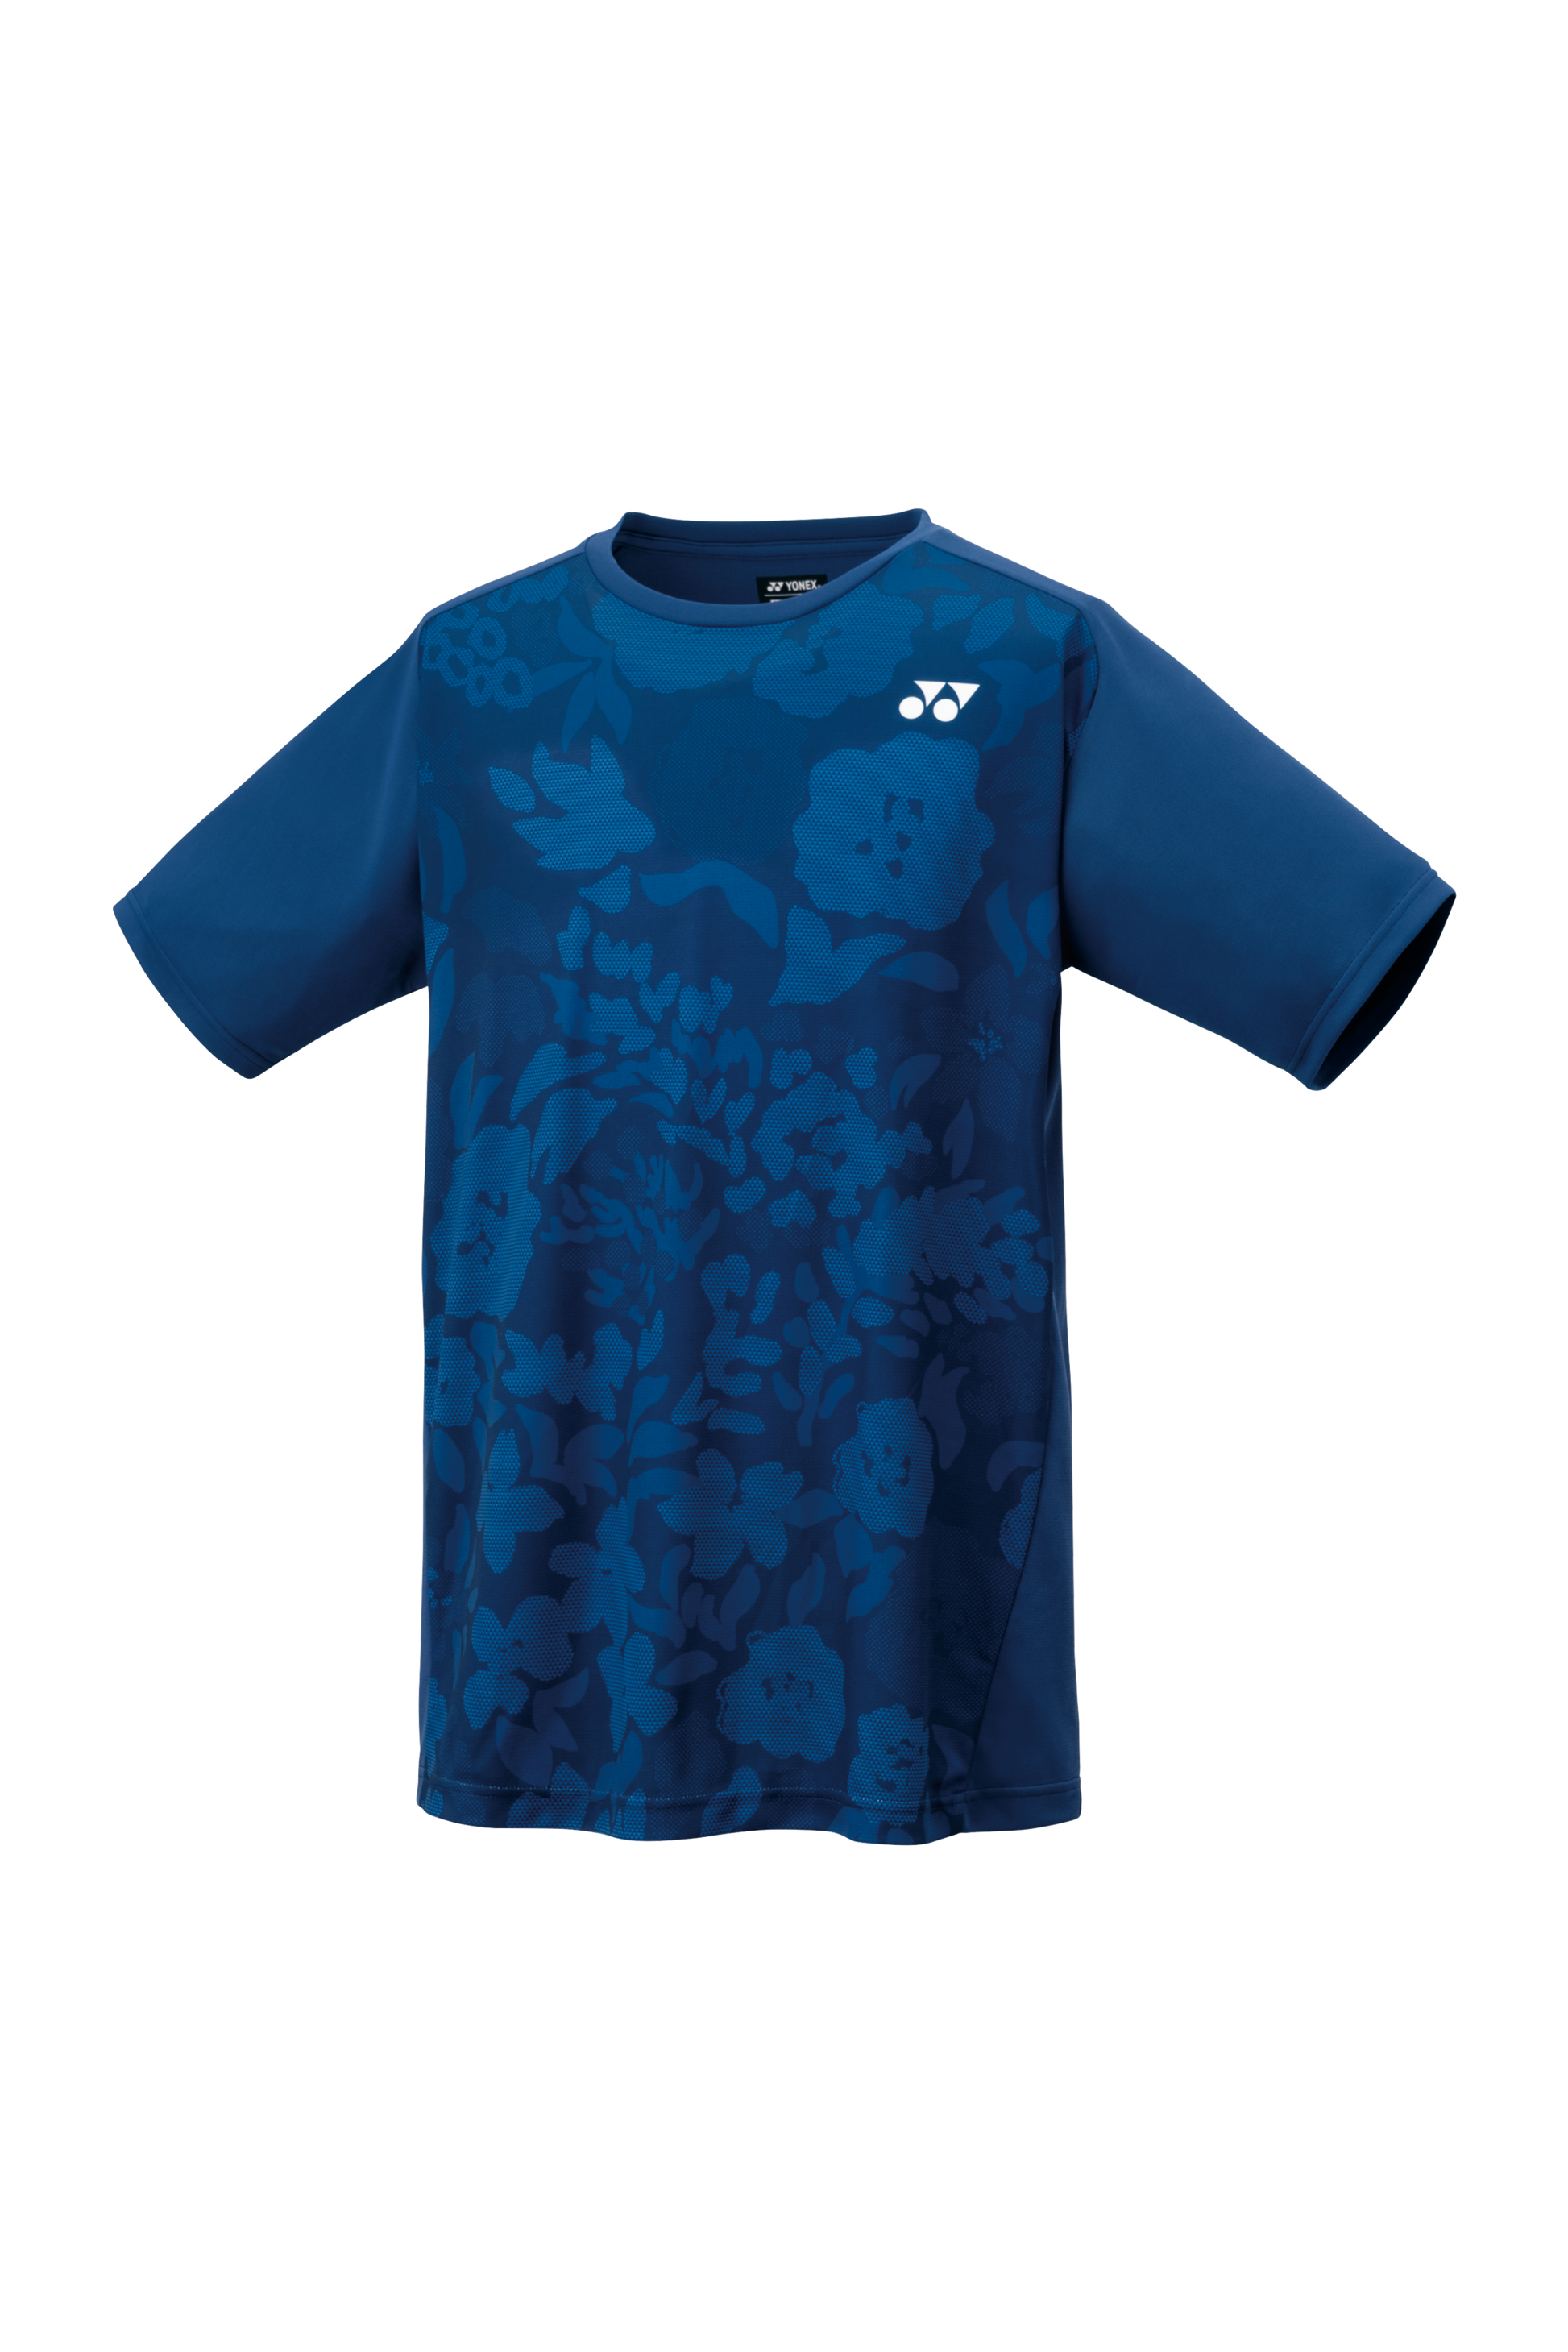 YONEX Men's Badminton Shirt 16631 AXELSEN REPLICA - Max Sports